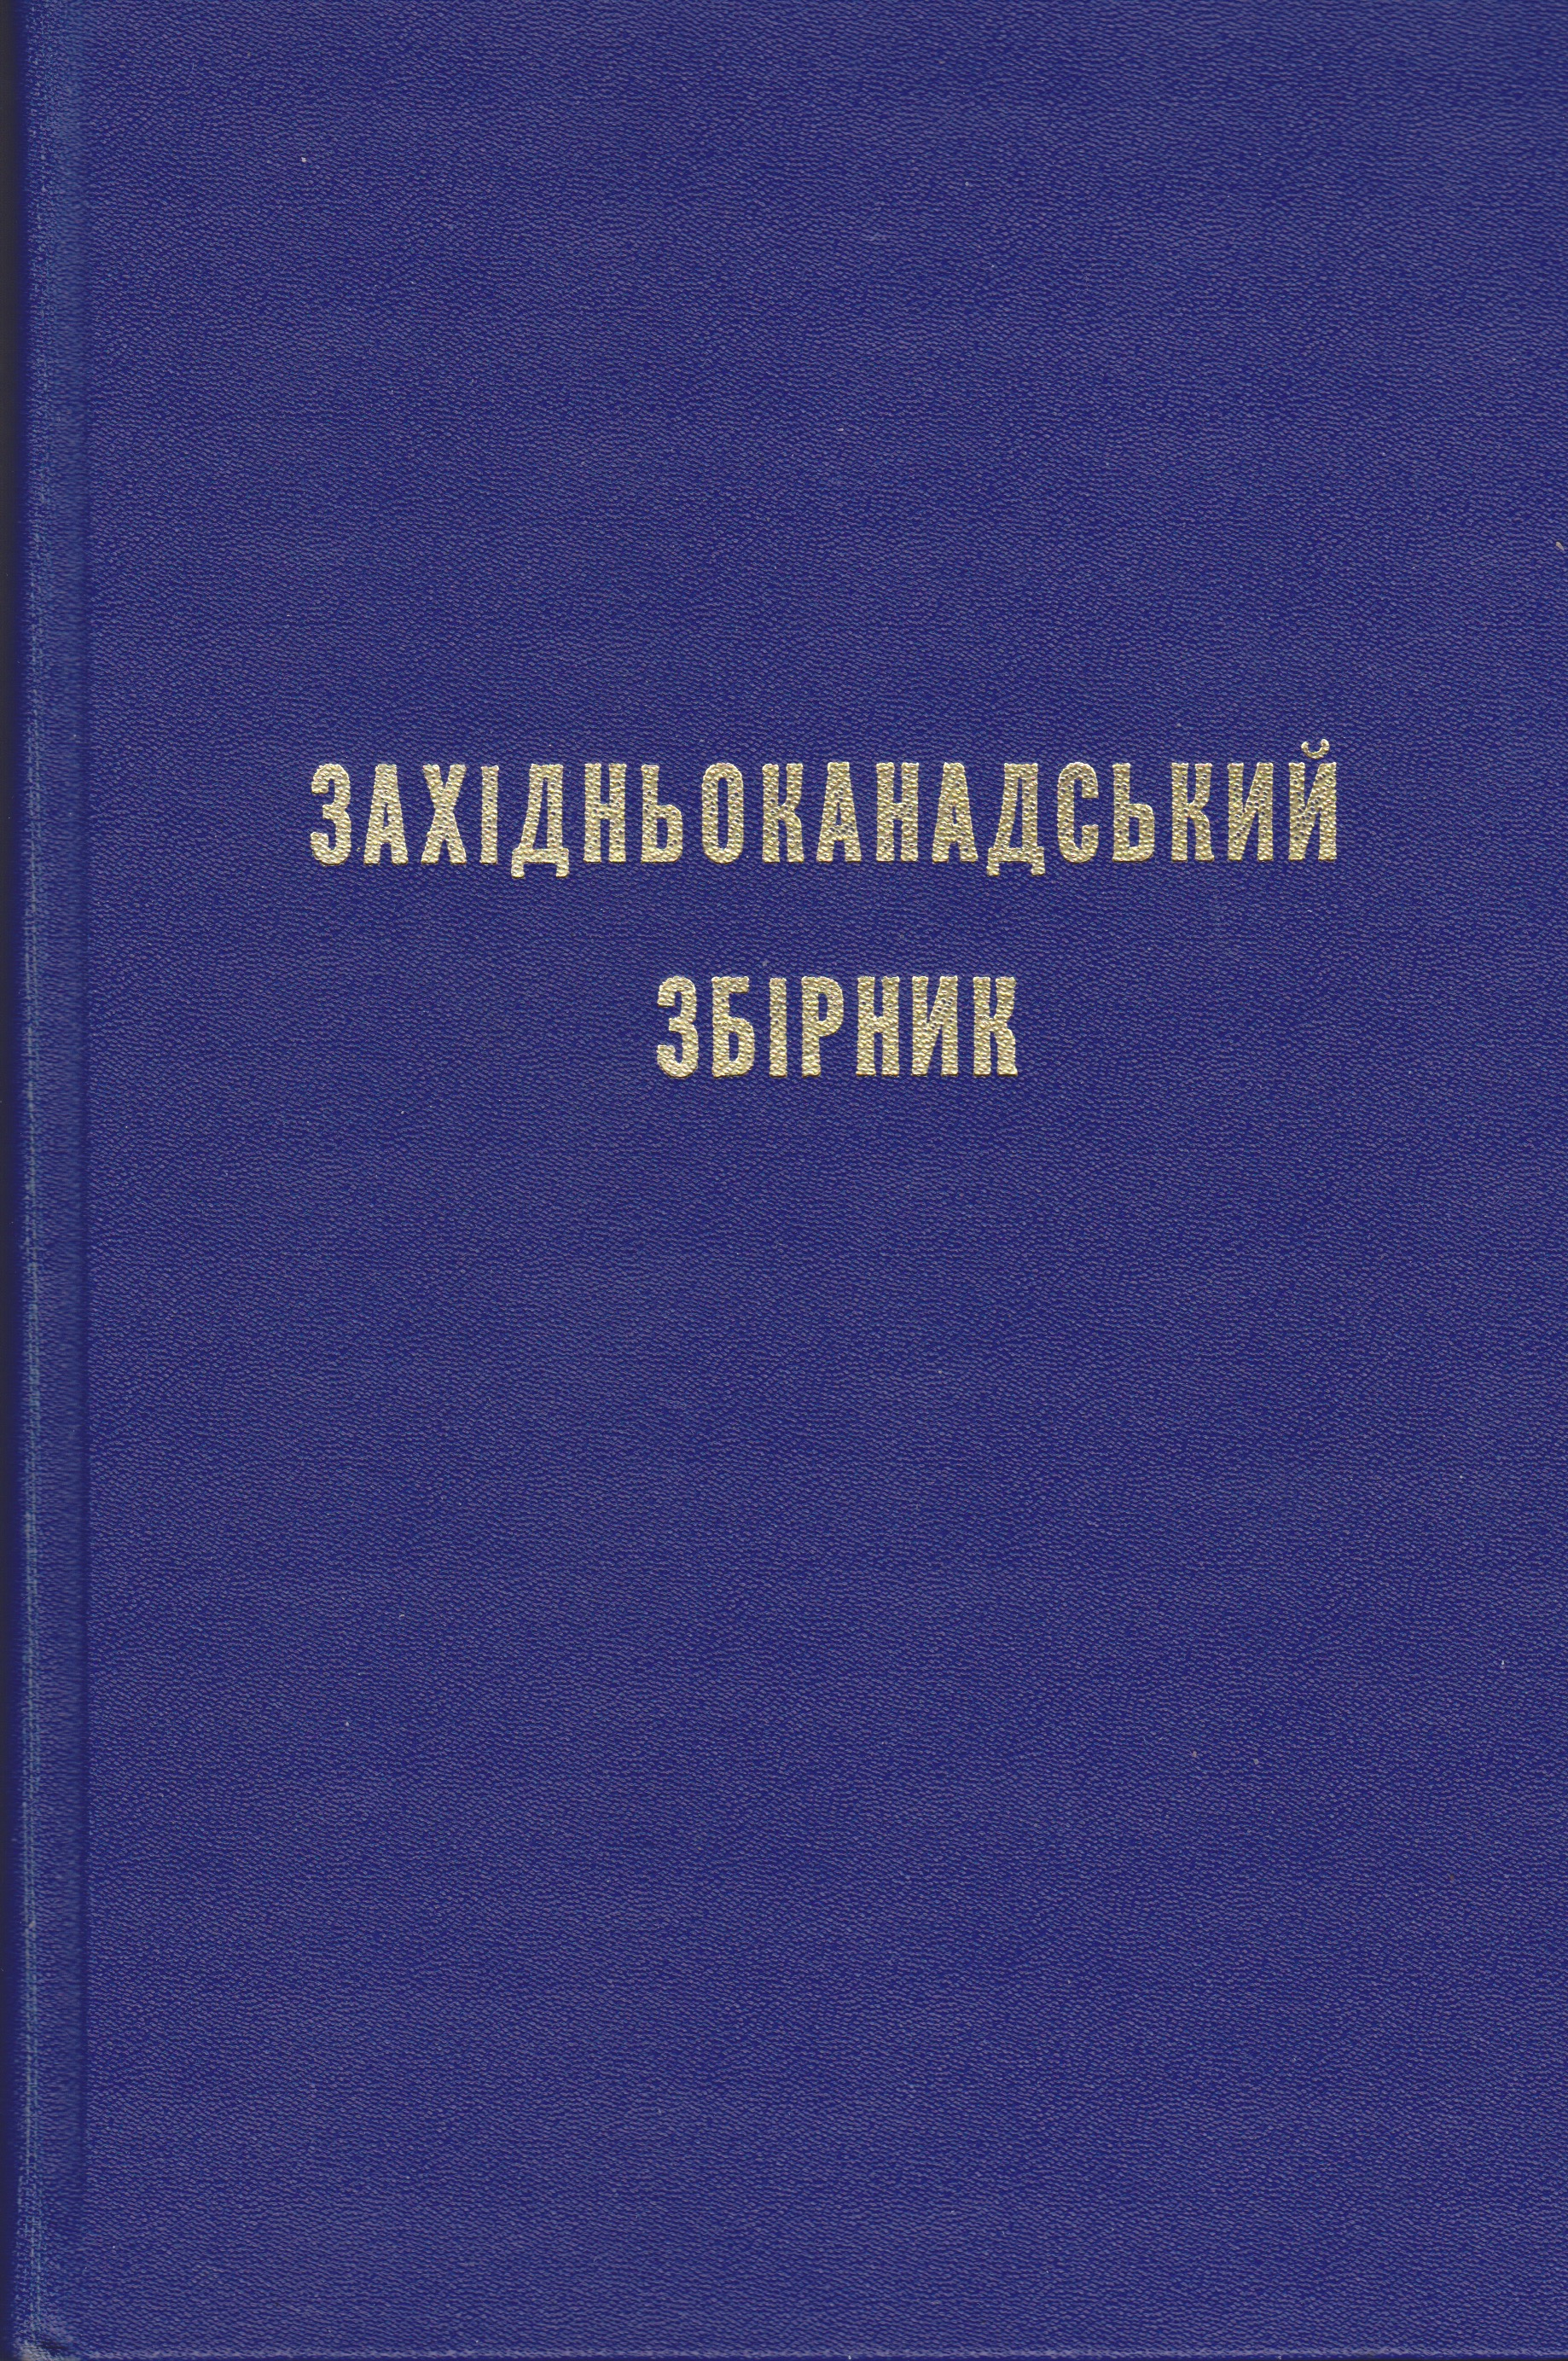 zbirnyk-1-cover